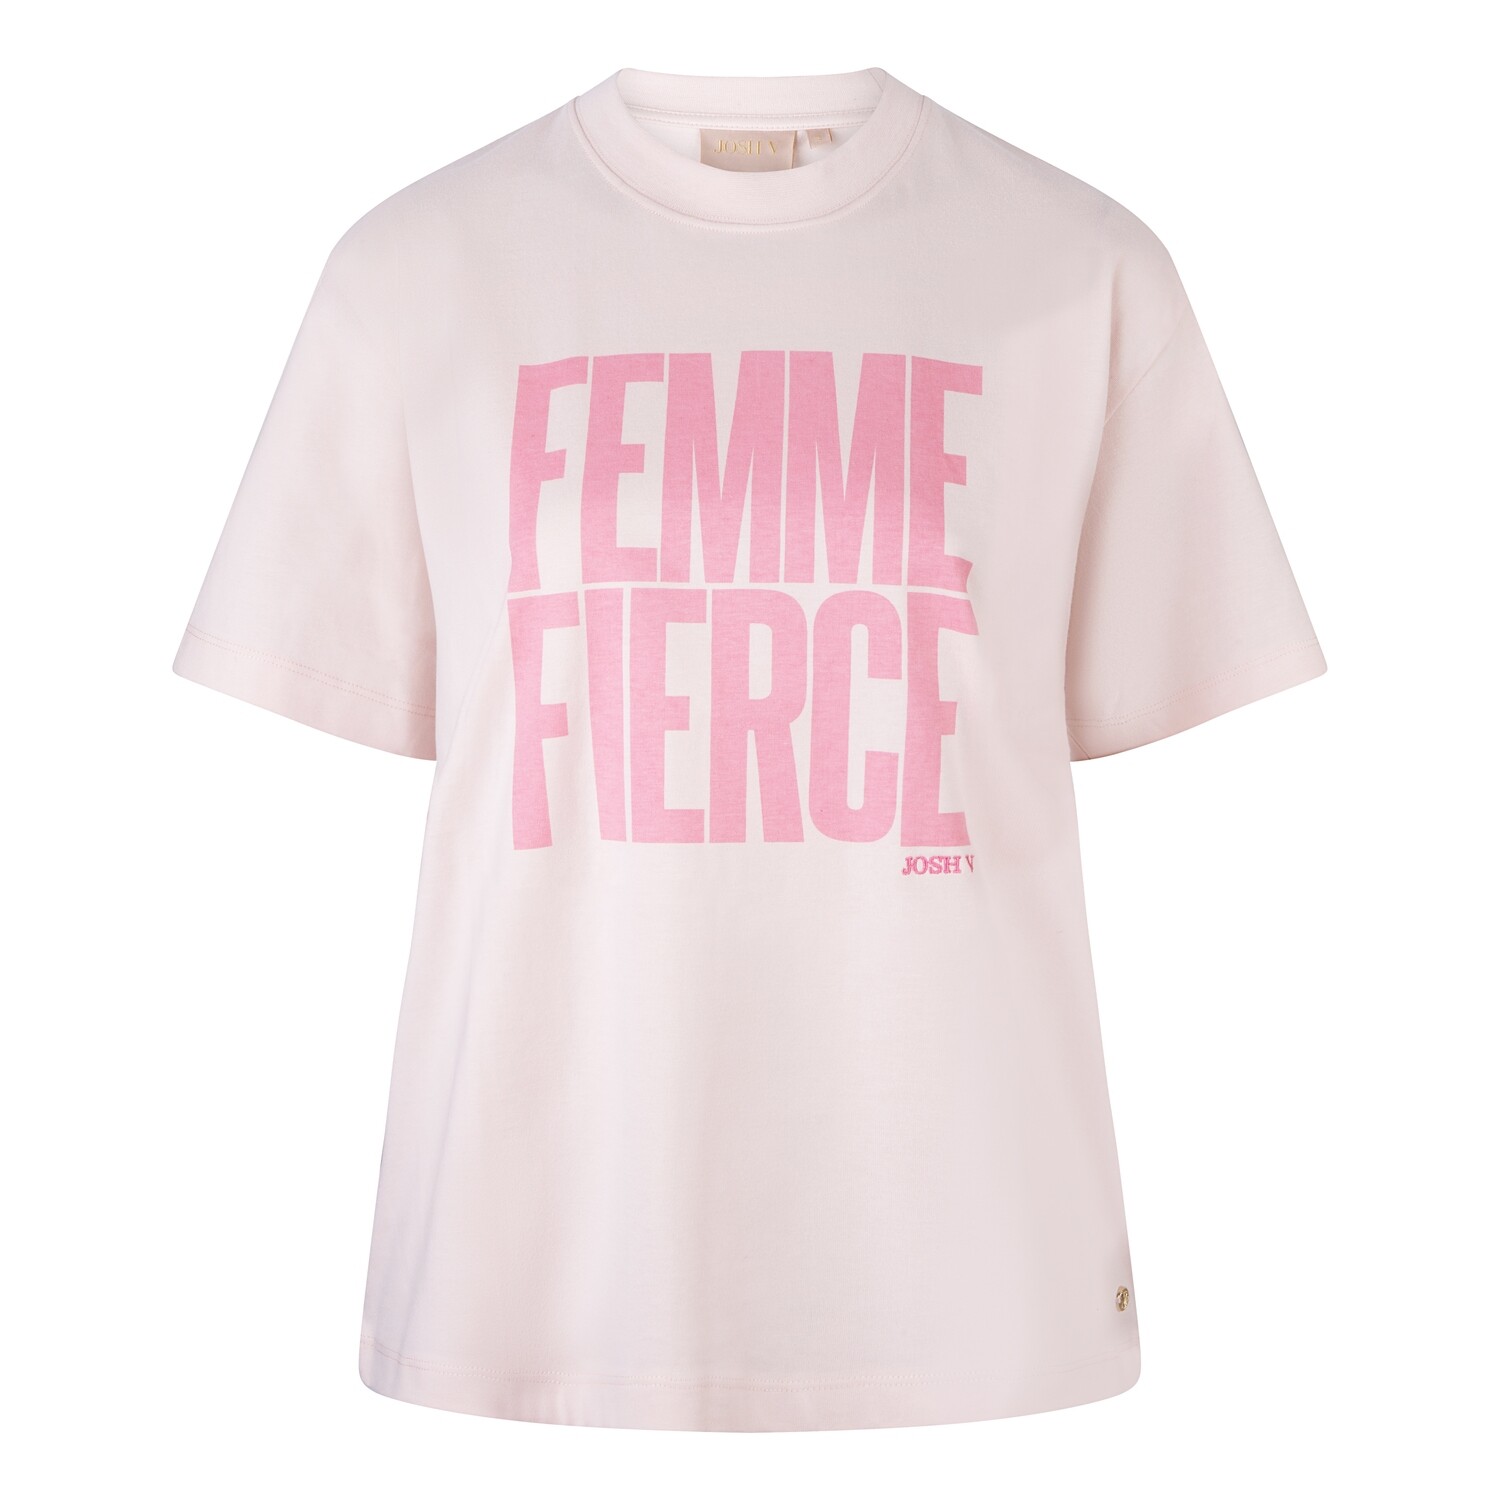 Josh V Teddy Femme T-Shirt Pink